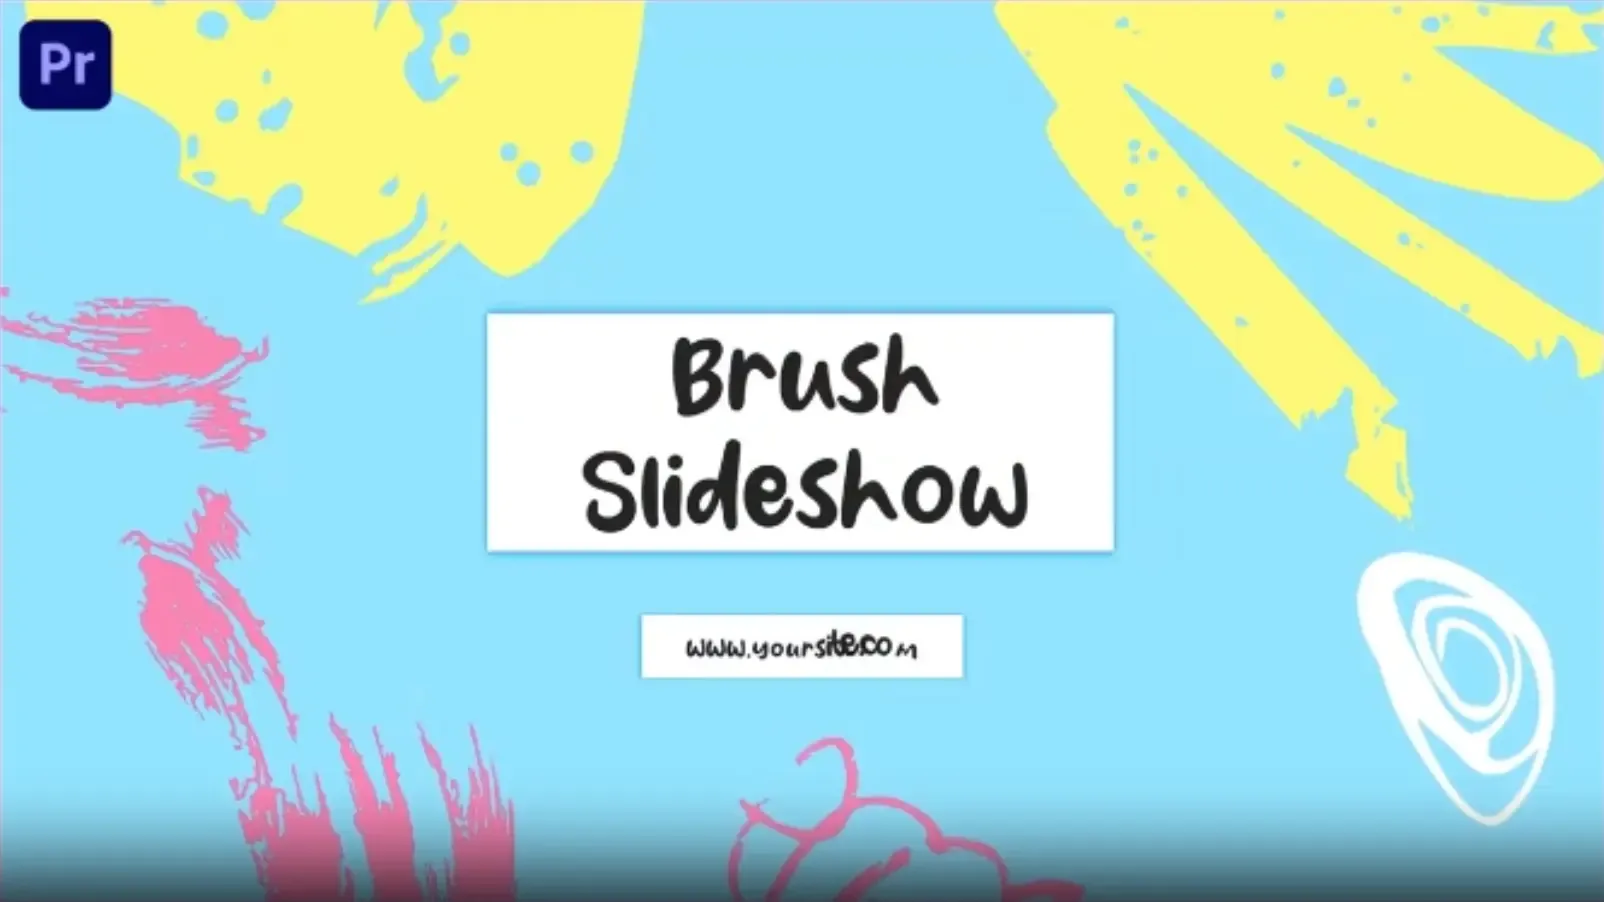 Brush Slideshow Premiere Pro Template